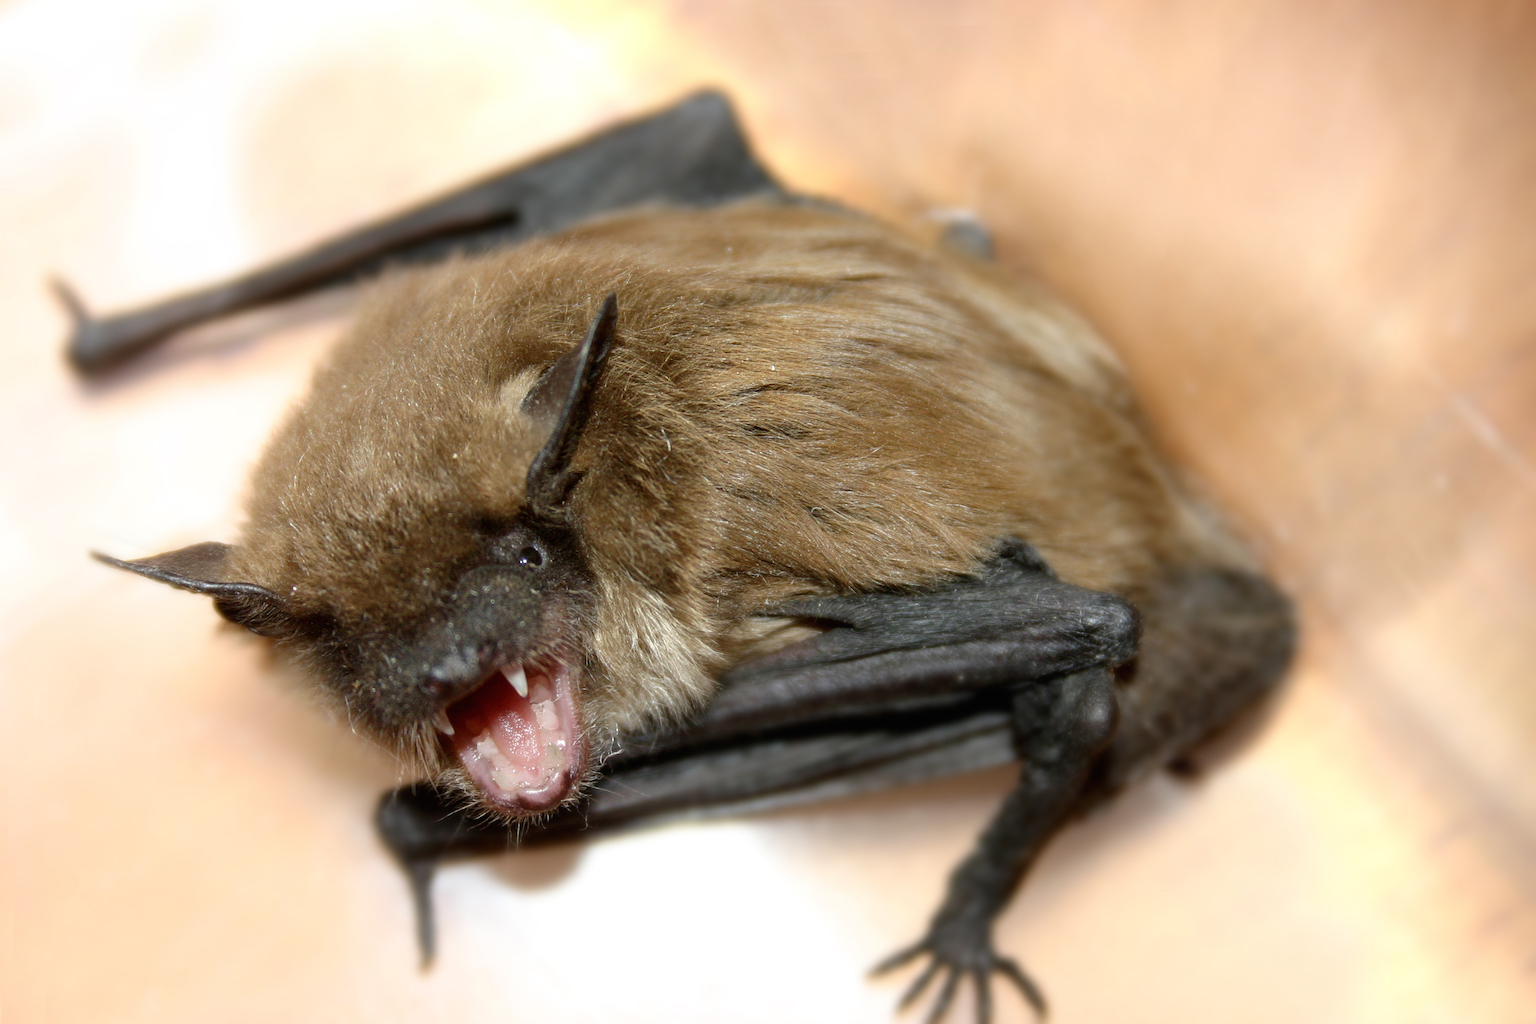 A brown bat baring its teeth.